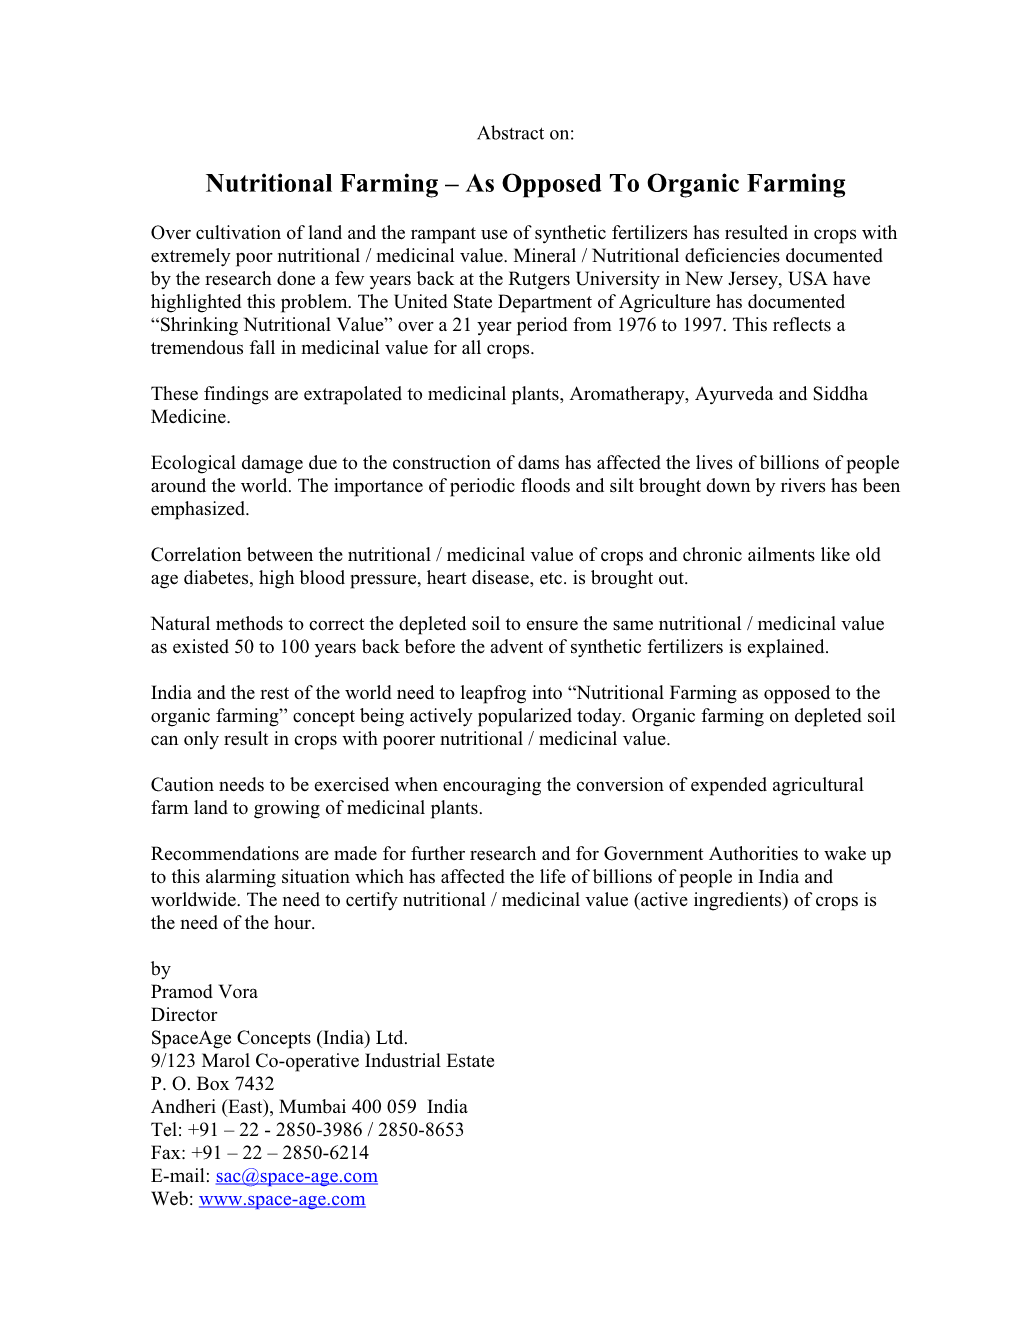 Nutritional Farming As Opposed to Organic Farming